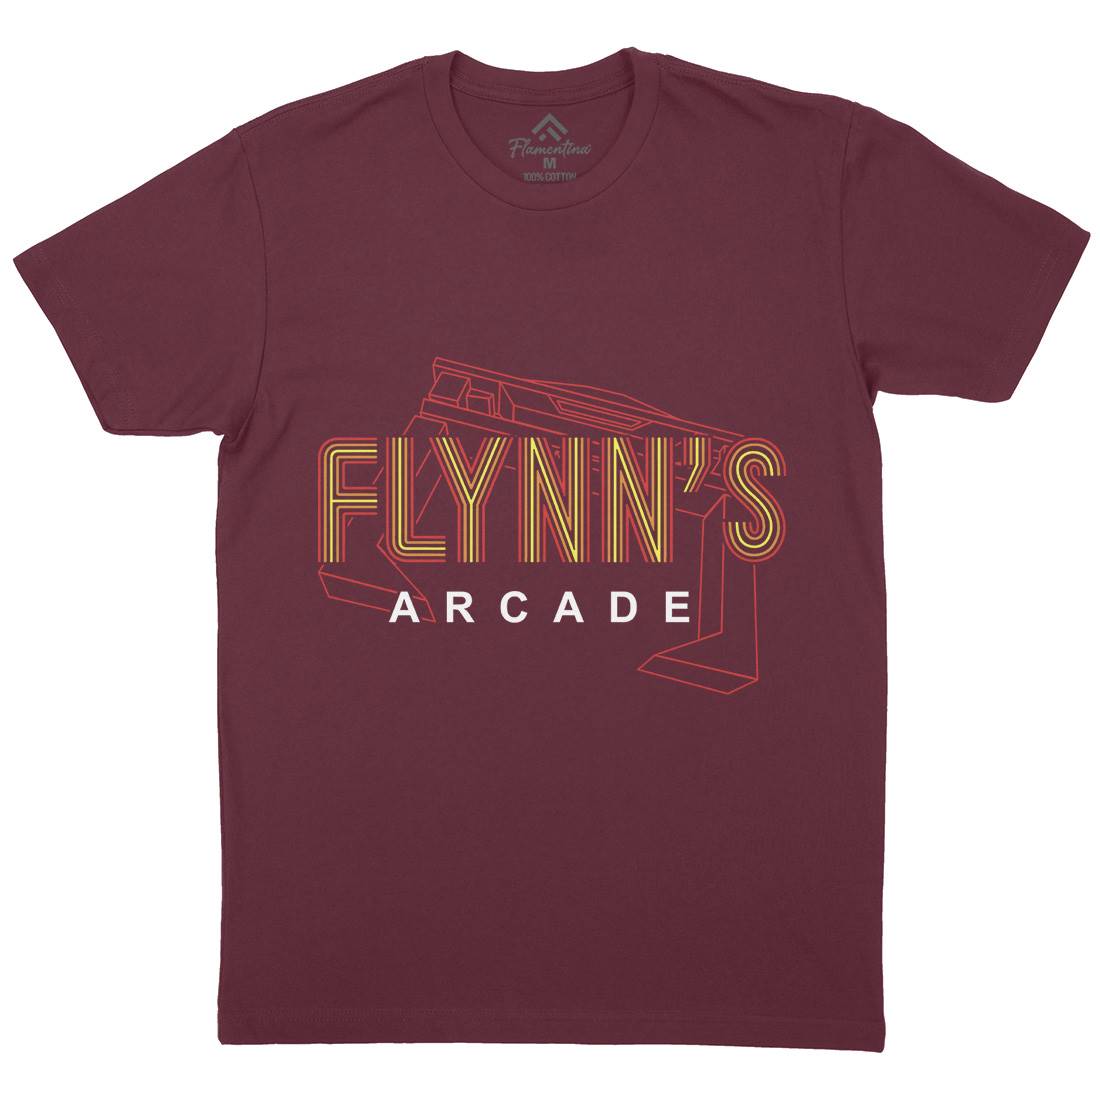 Flynns Arcade Mens Crew Neck T-Shirt Space D154